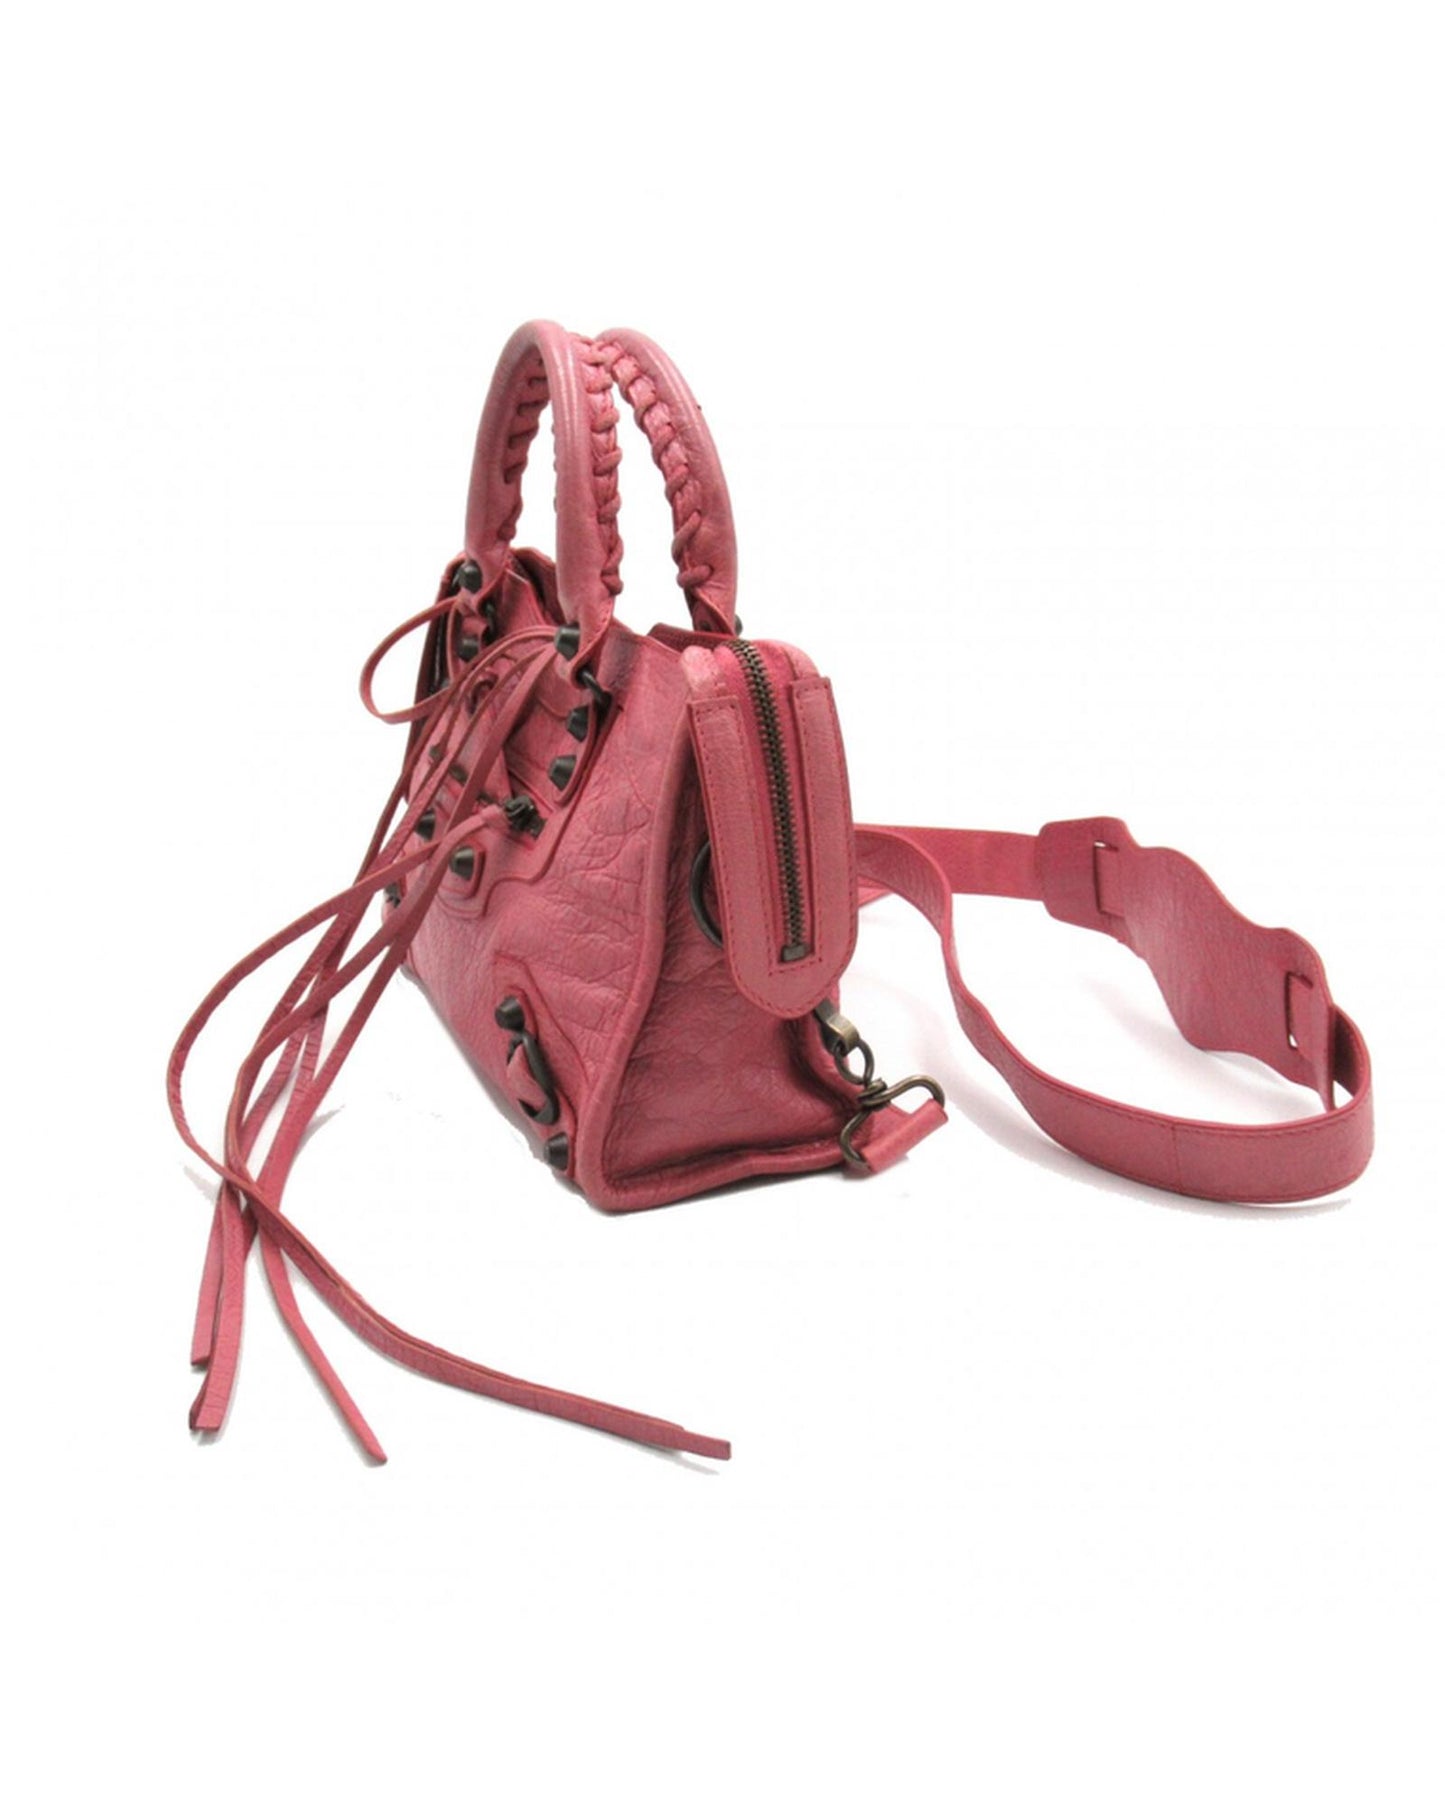 Balenciaga Women's Classic Leather Mini City Bag in Pink